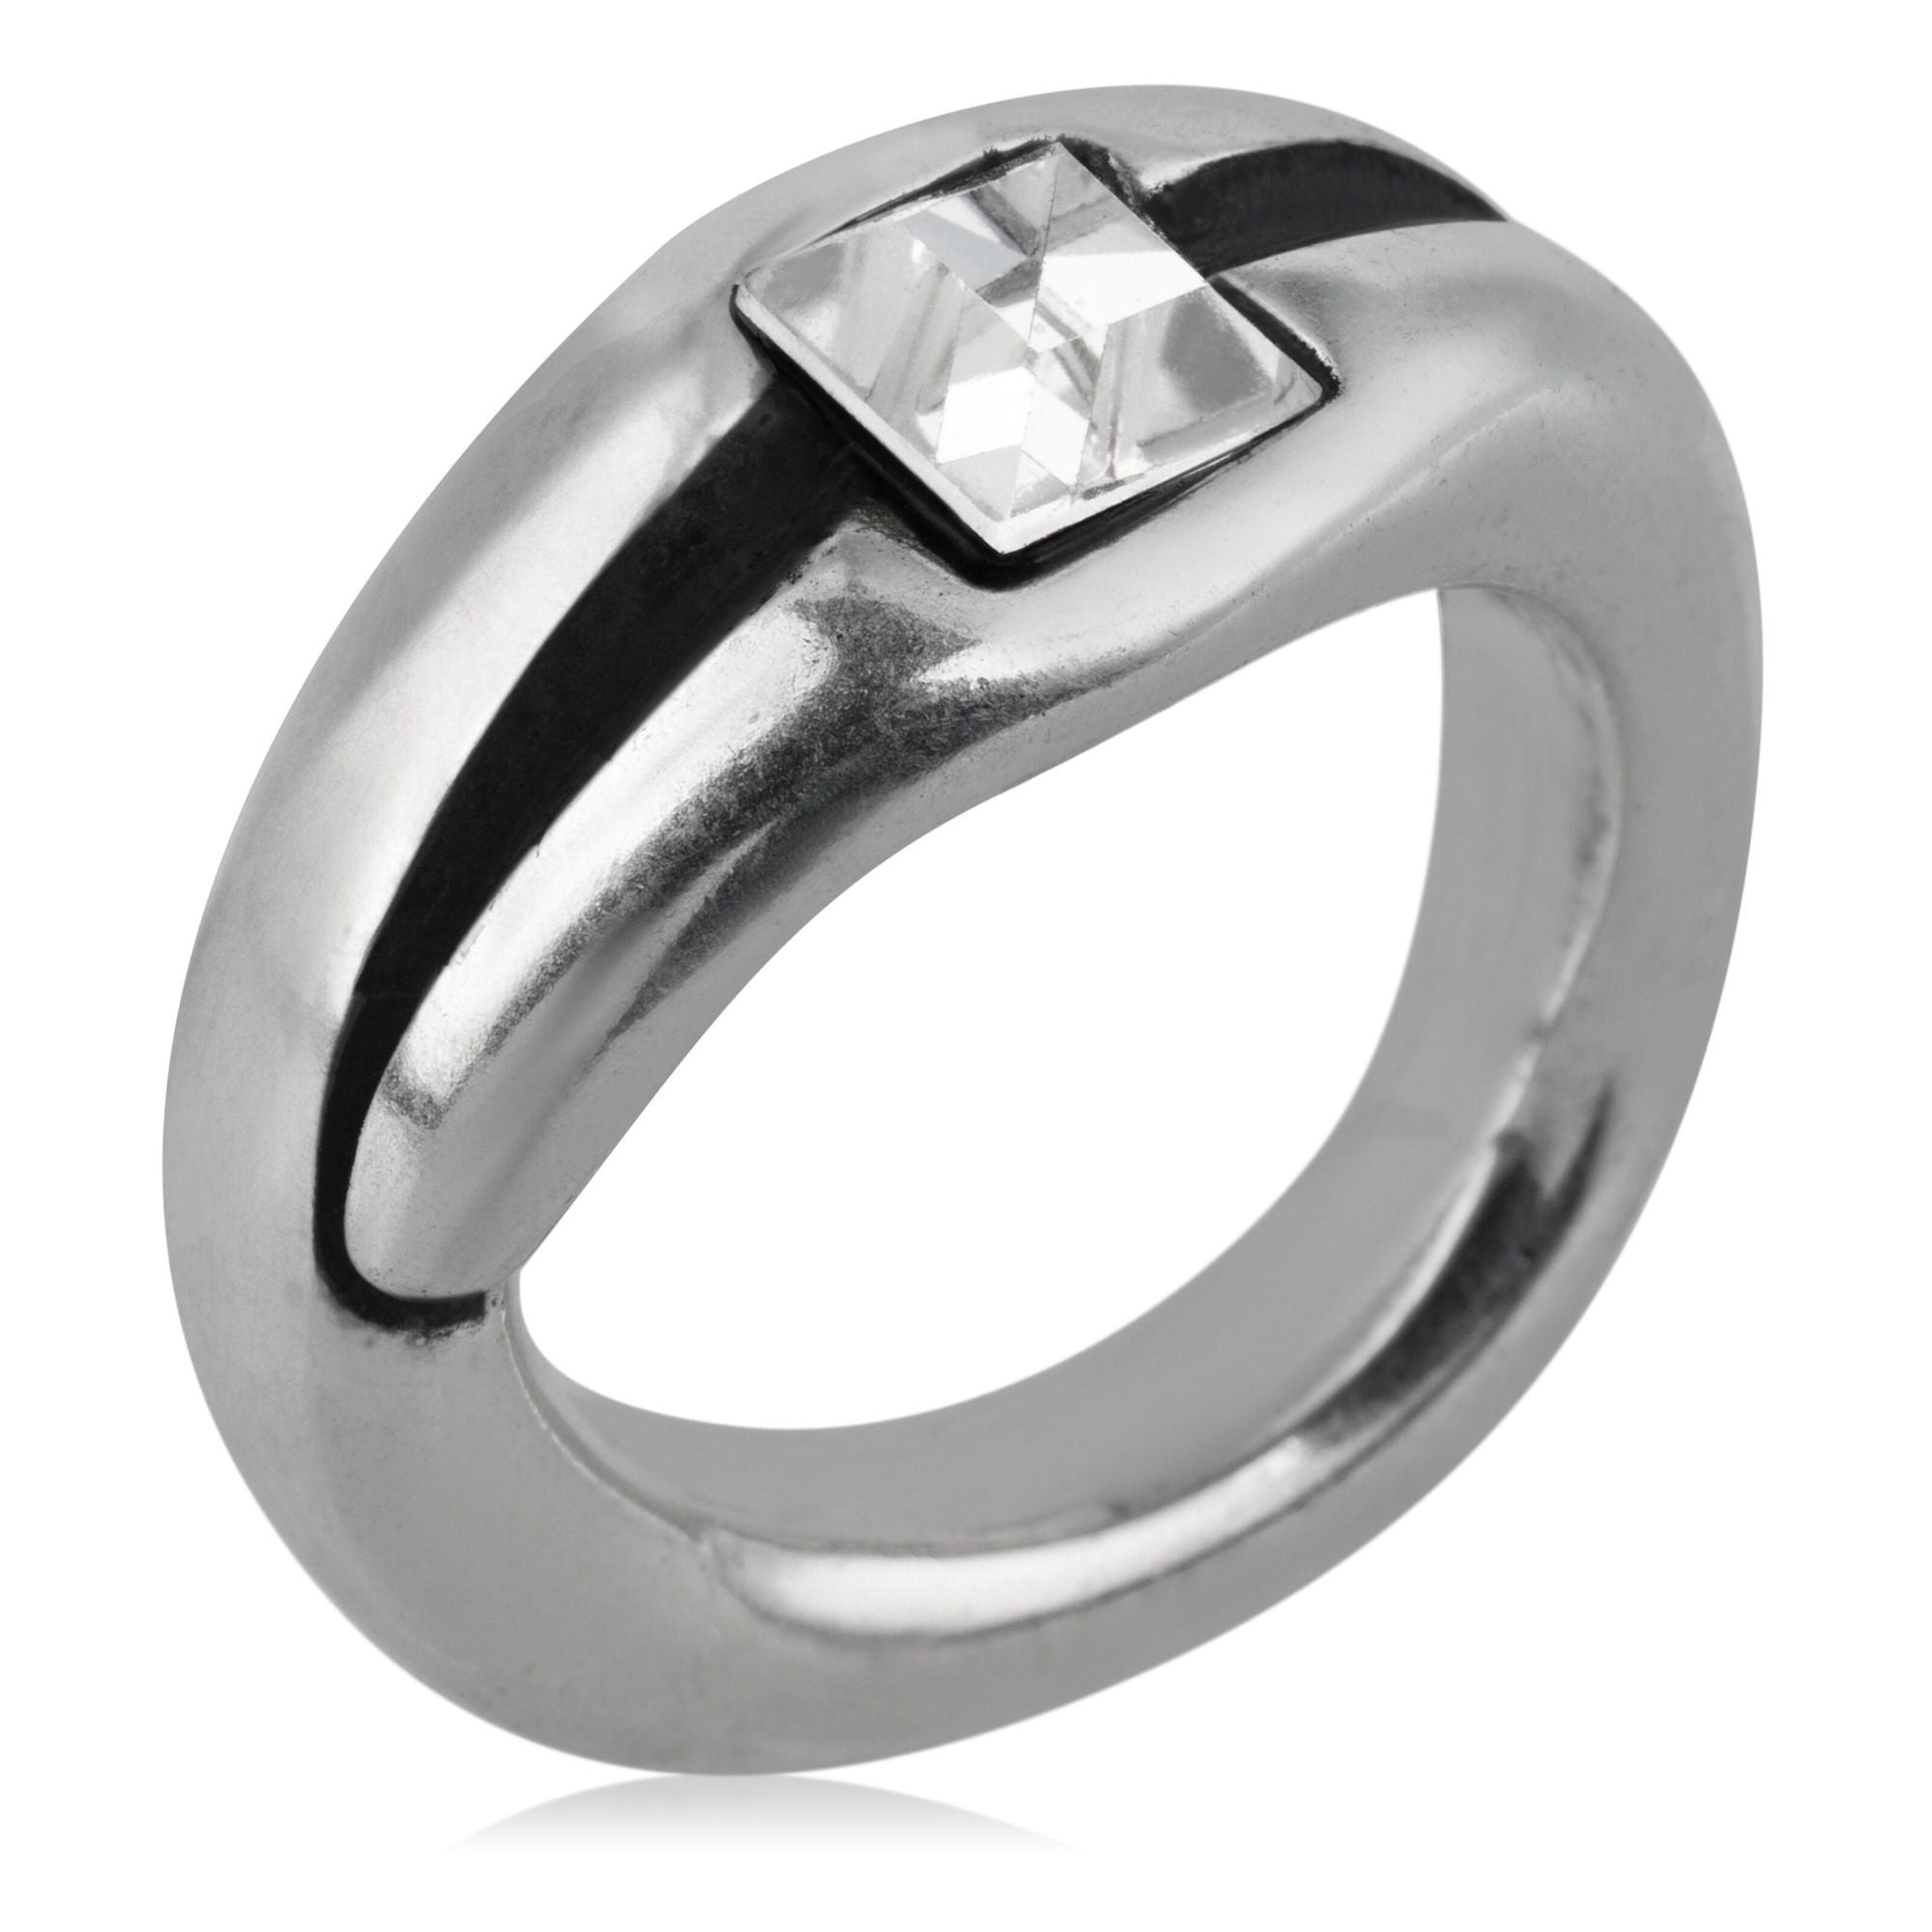 Ring Swarovski Silver size 55 EU in Other - 21702893